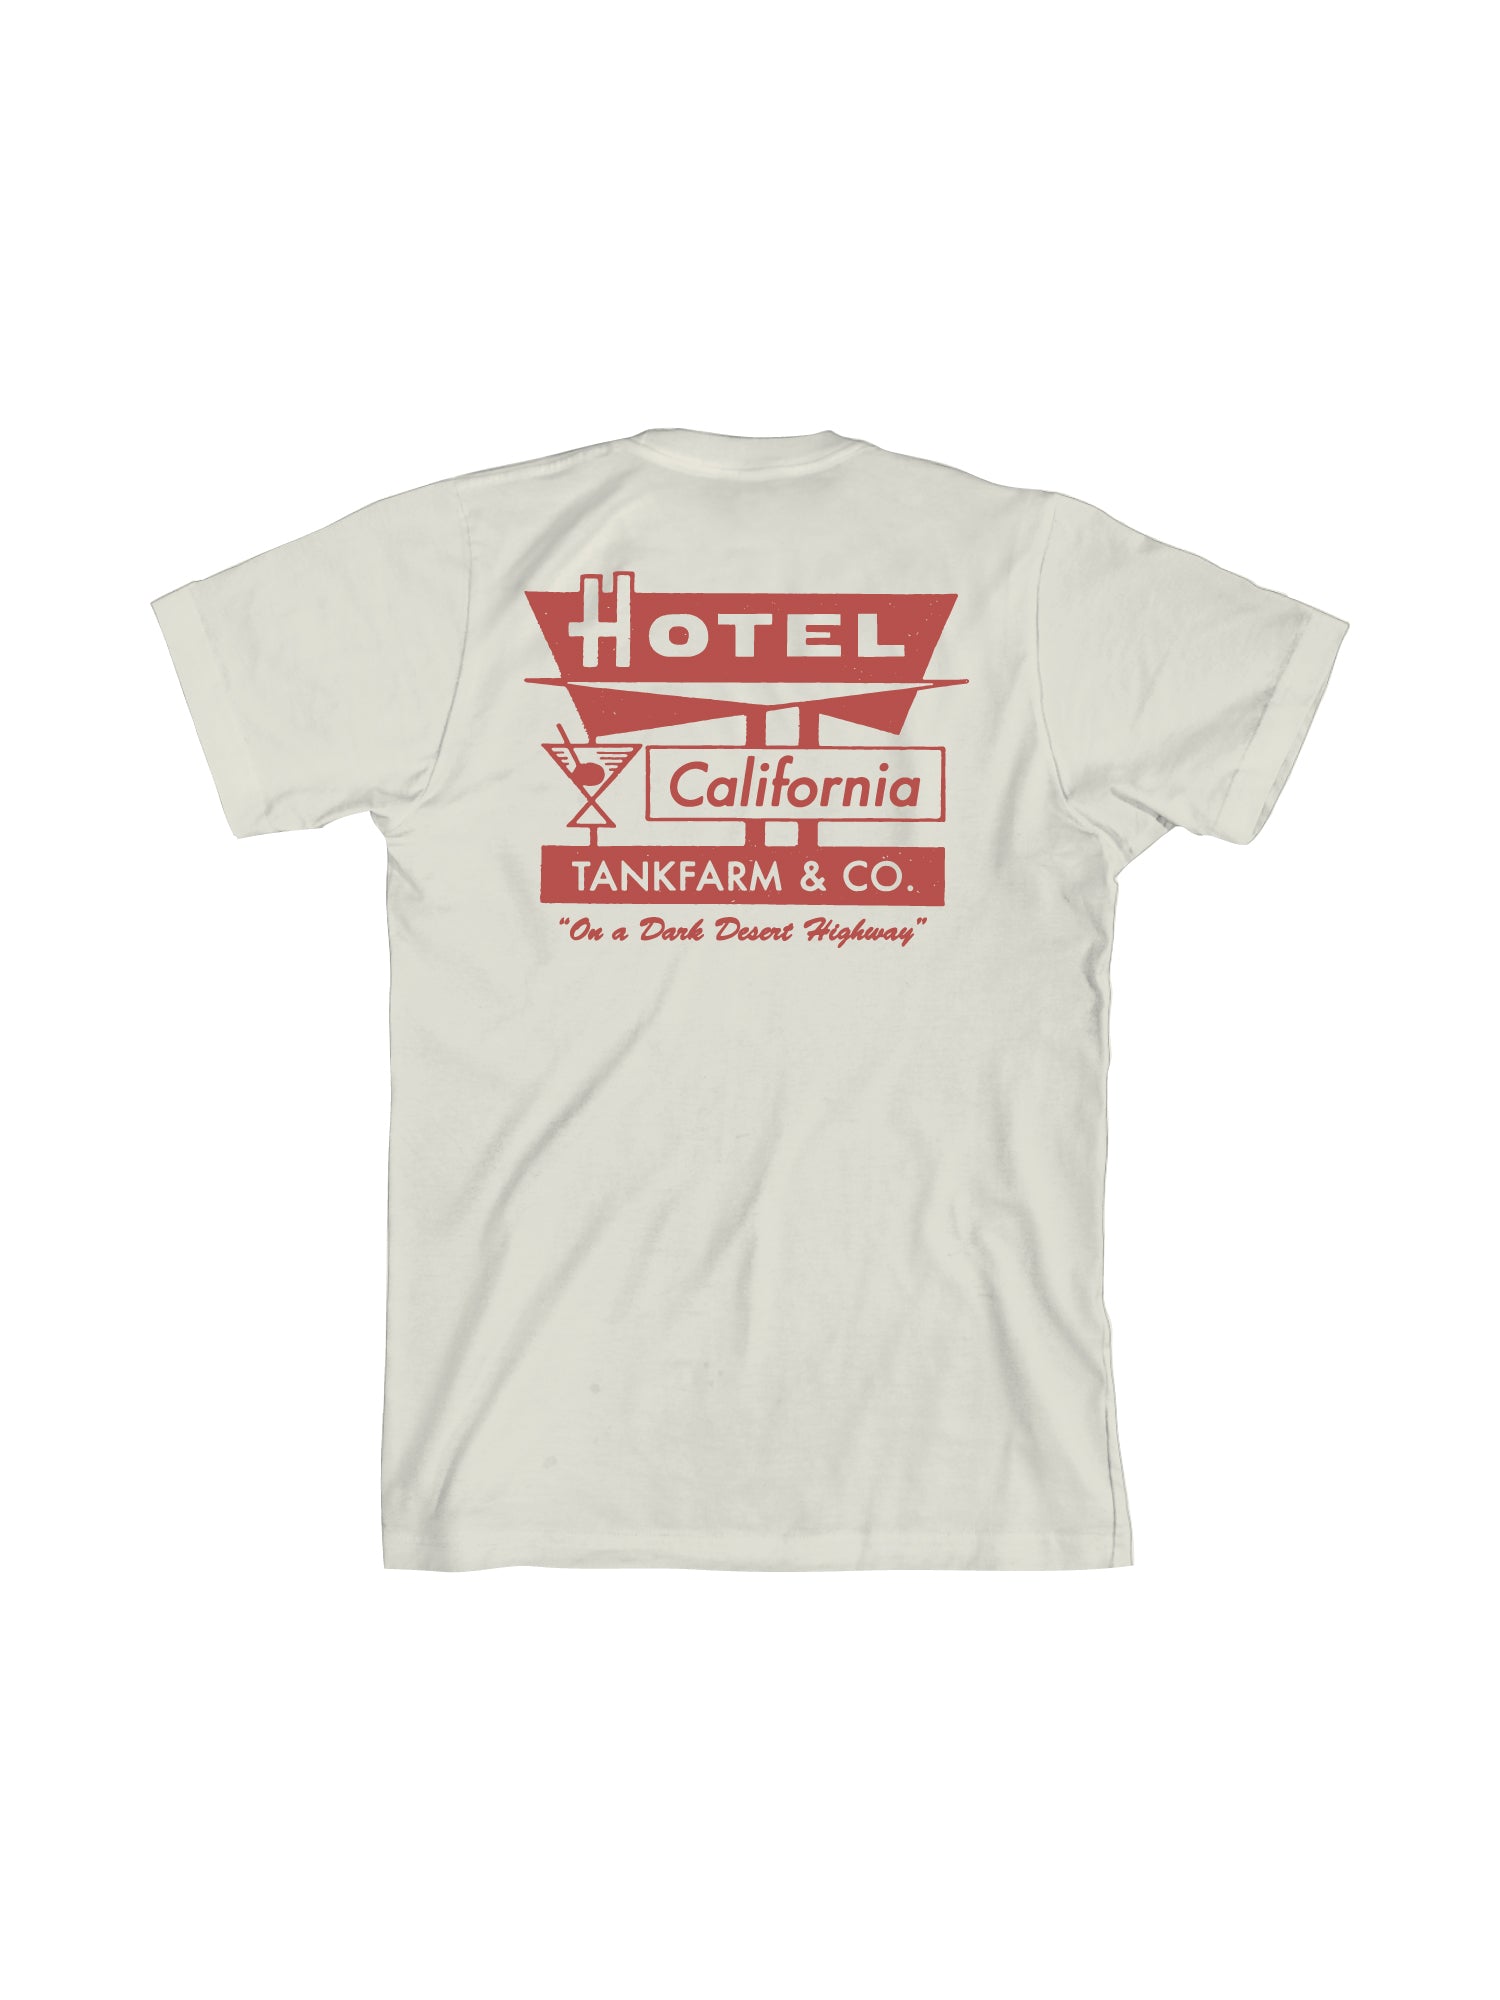 HOTEL CALIFORNIA - WHITE - Tankfarm & Co.